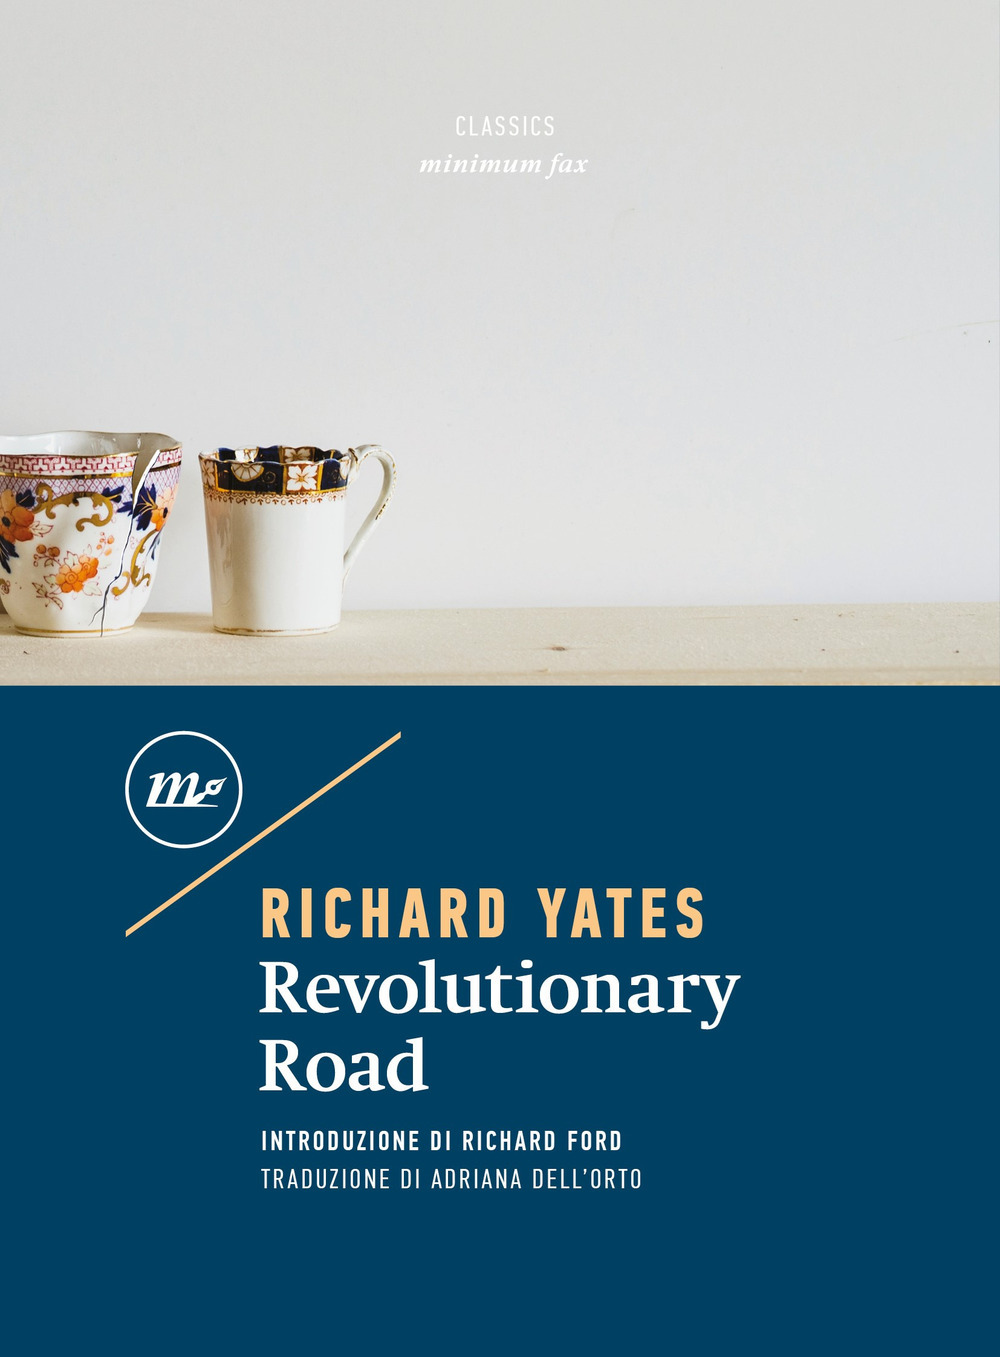 Revolutionary Road - Richard Yates - Minimum Fax